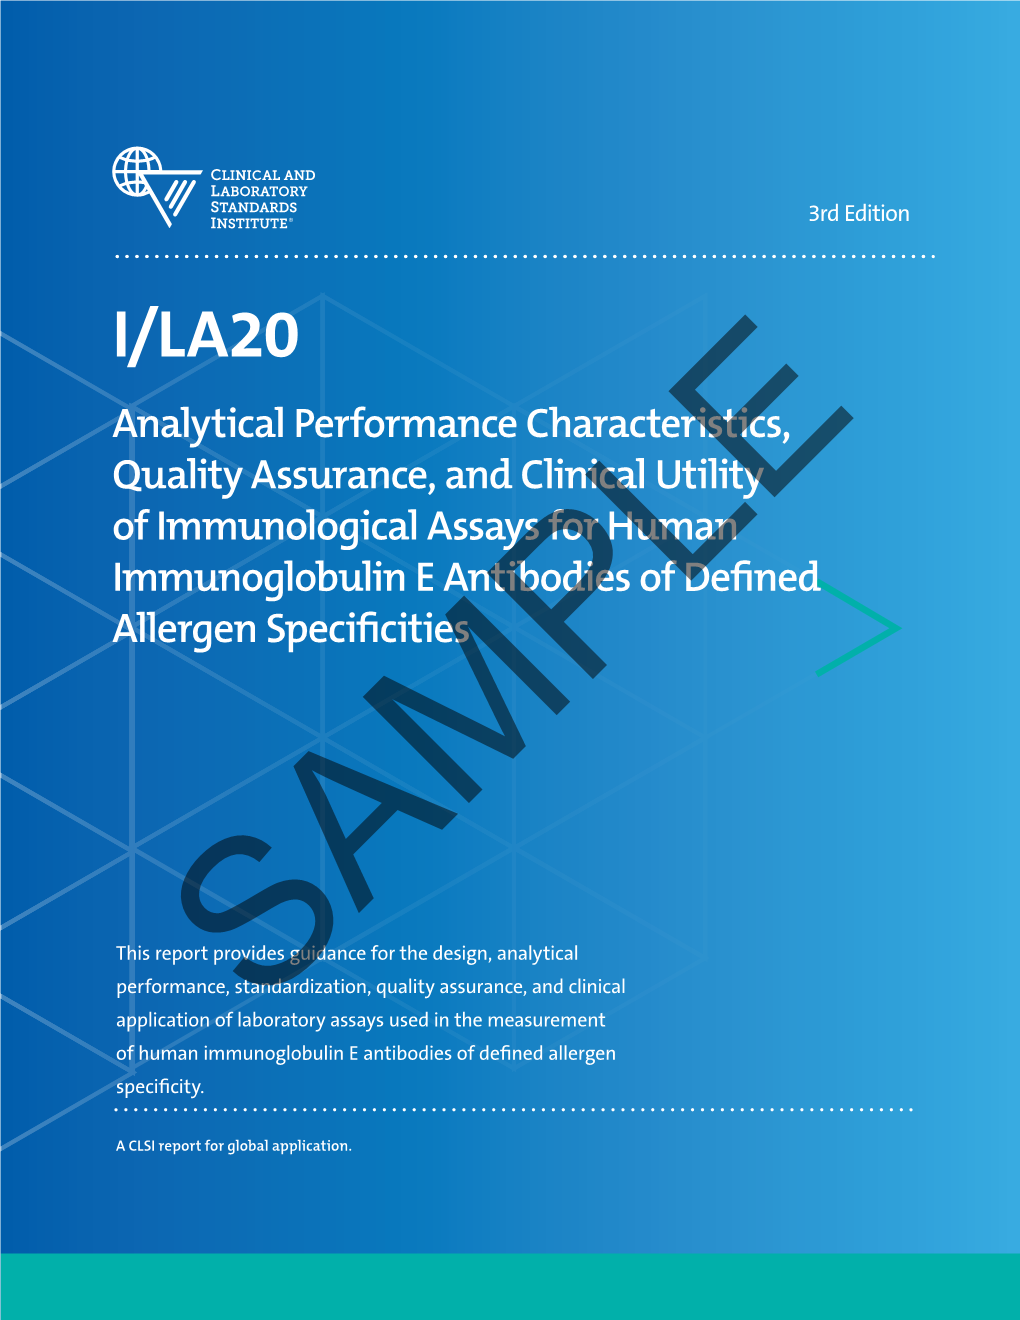 ILA/20: Analytical Performance Characteristics, Quality Assurance